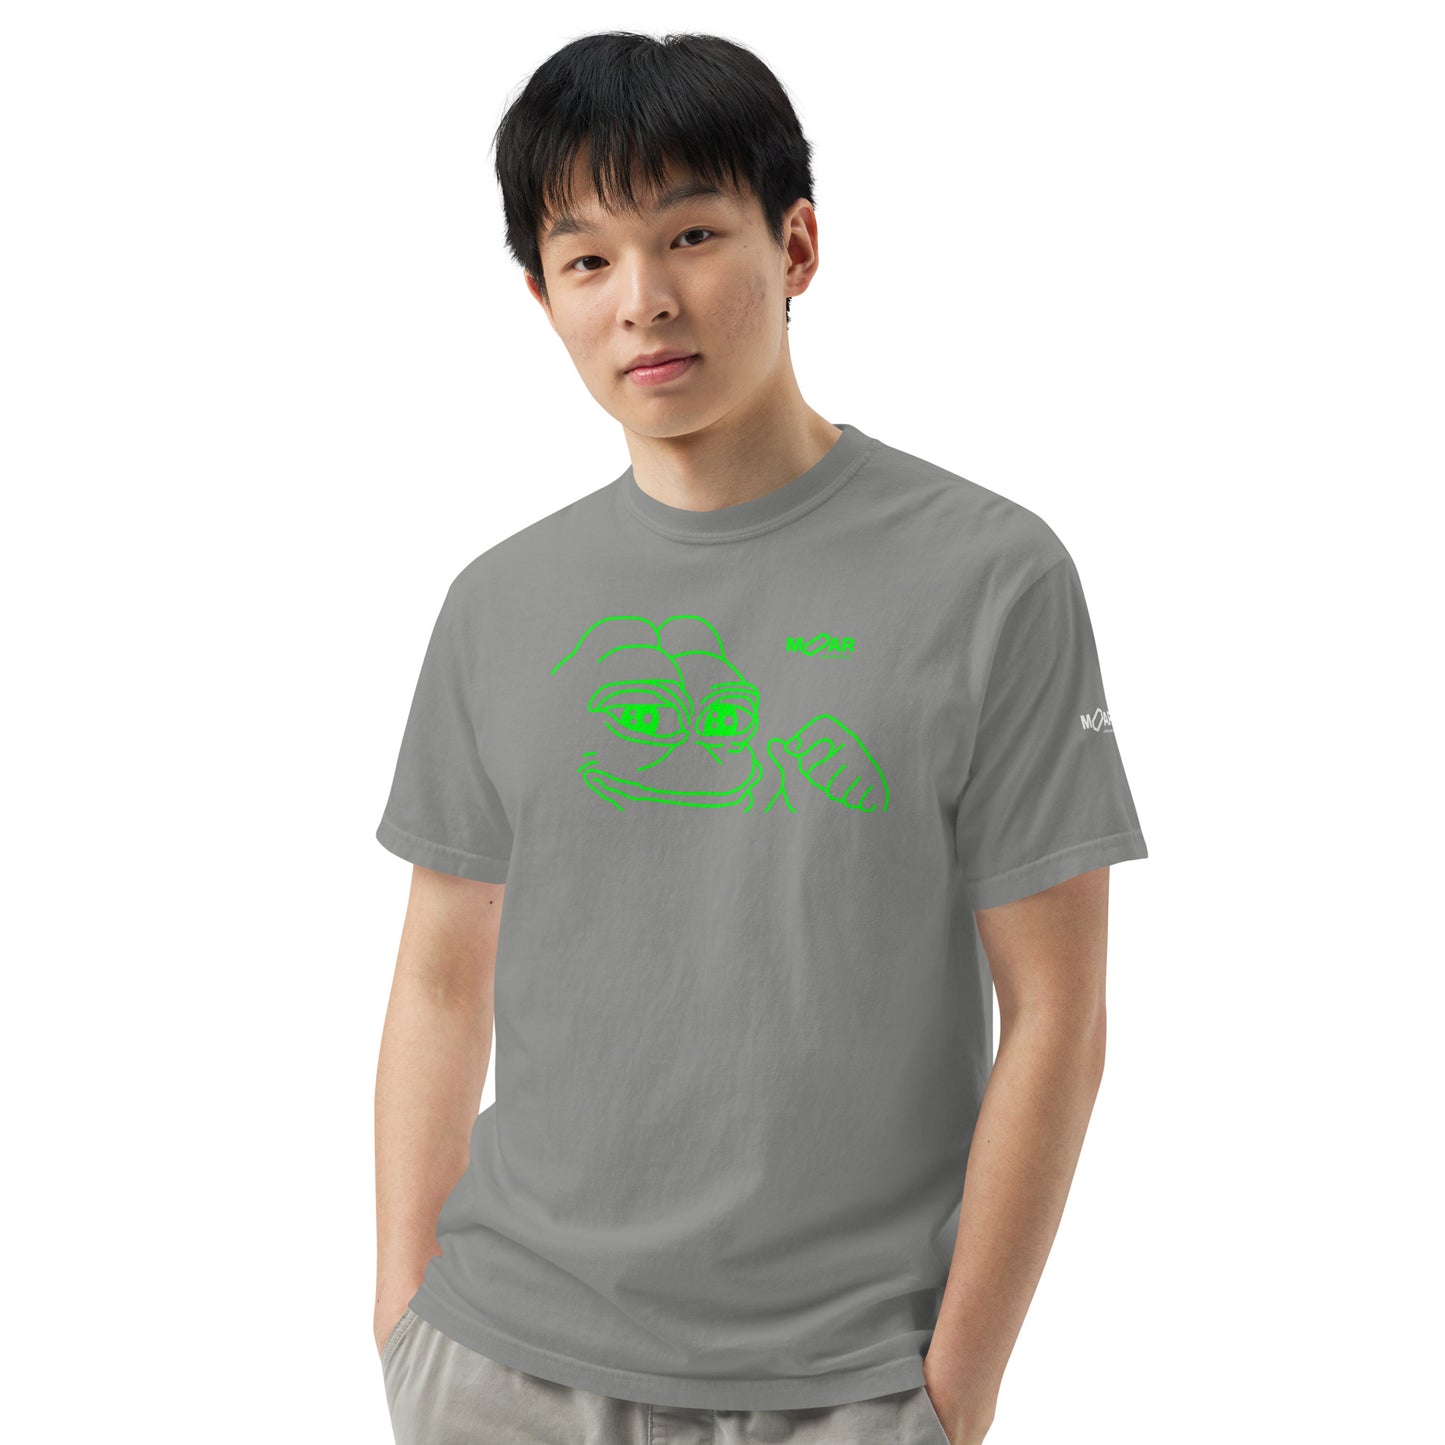 Pepe Crypto Memecoin T-Shirt | MOAR Awareness Crypto Apparel